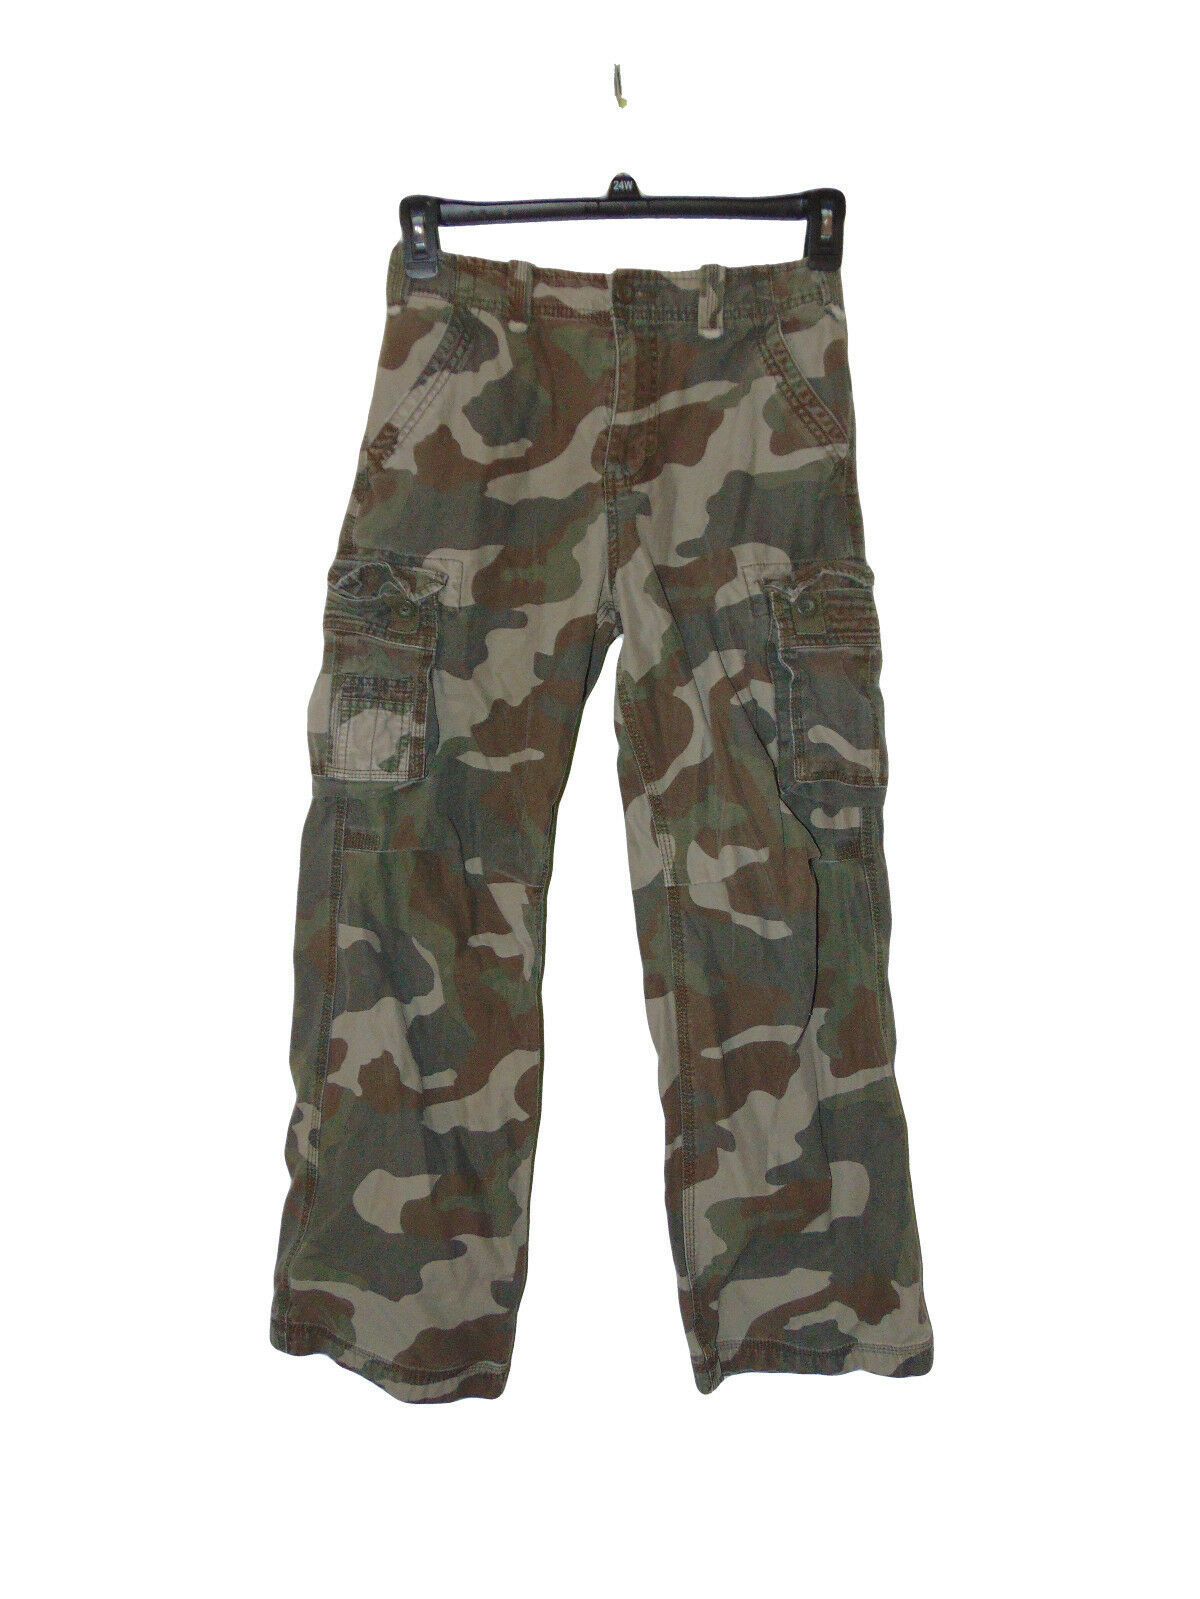 Arizona Camo Cargo Pants Size 14 Reg Preowned - Pants